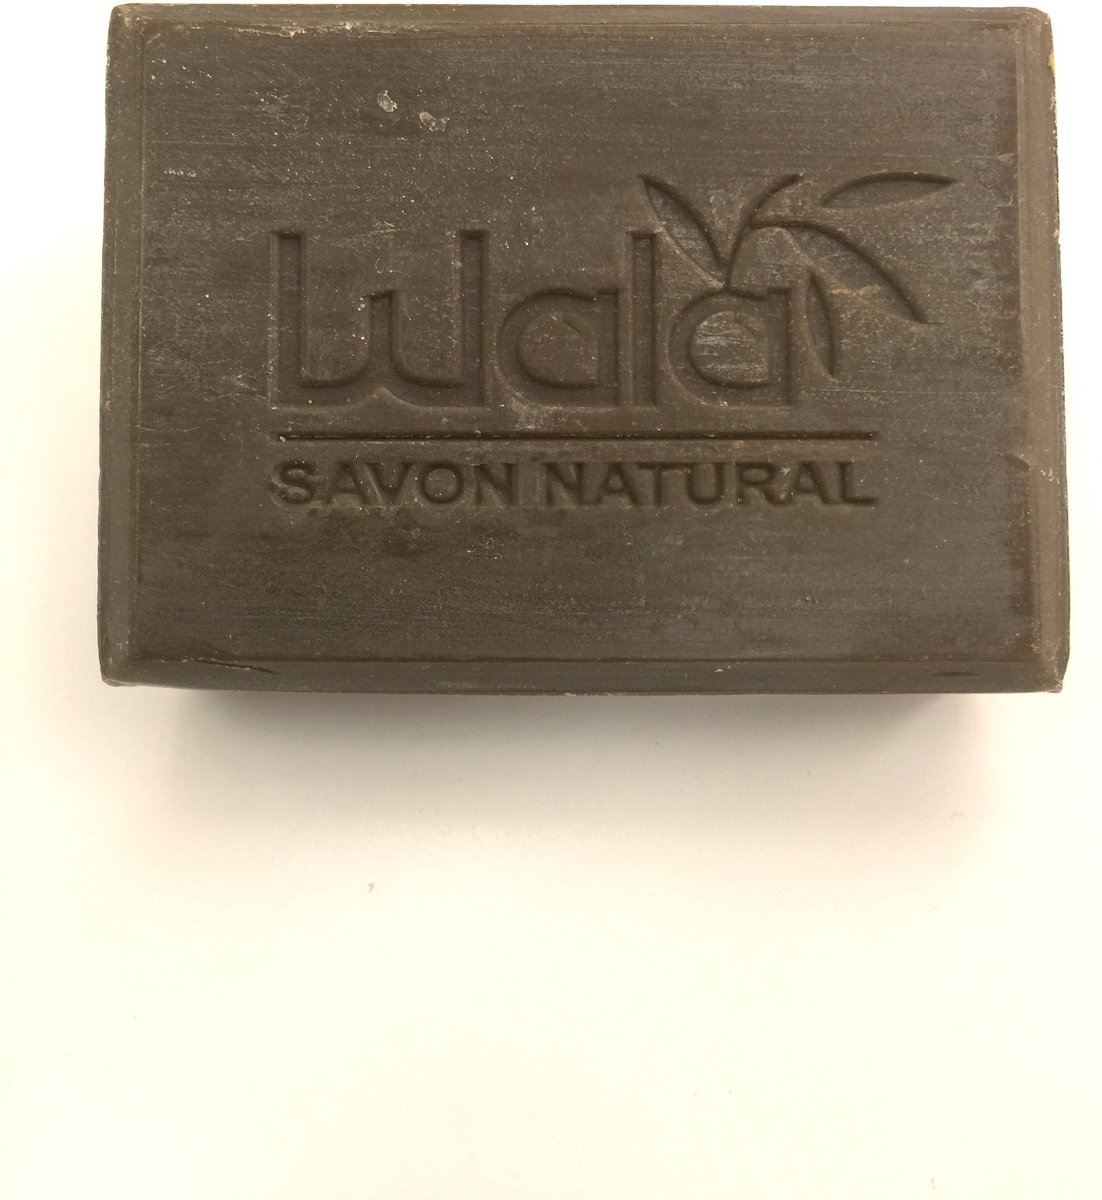 Wala Savon Natural - Misk - Musk